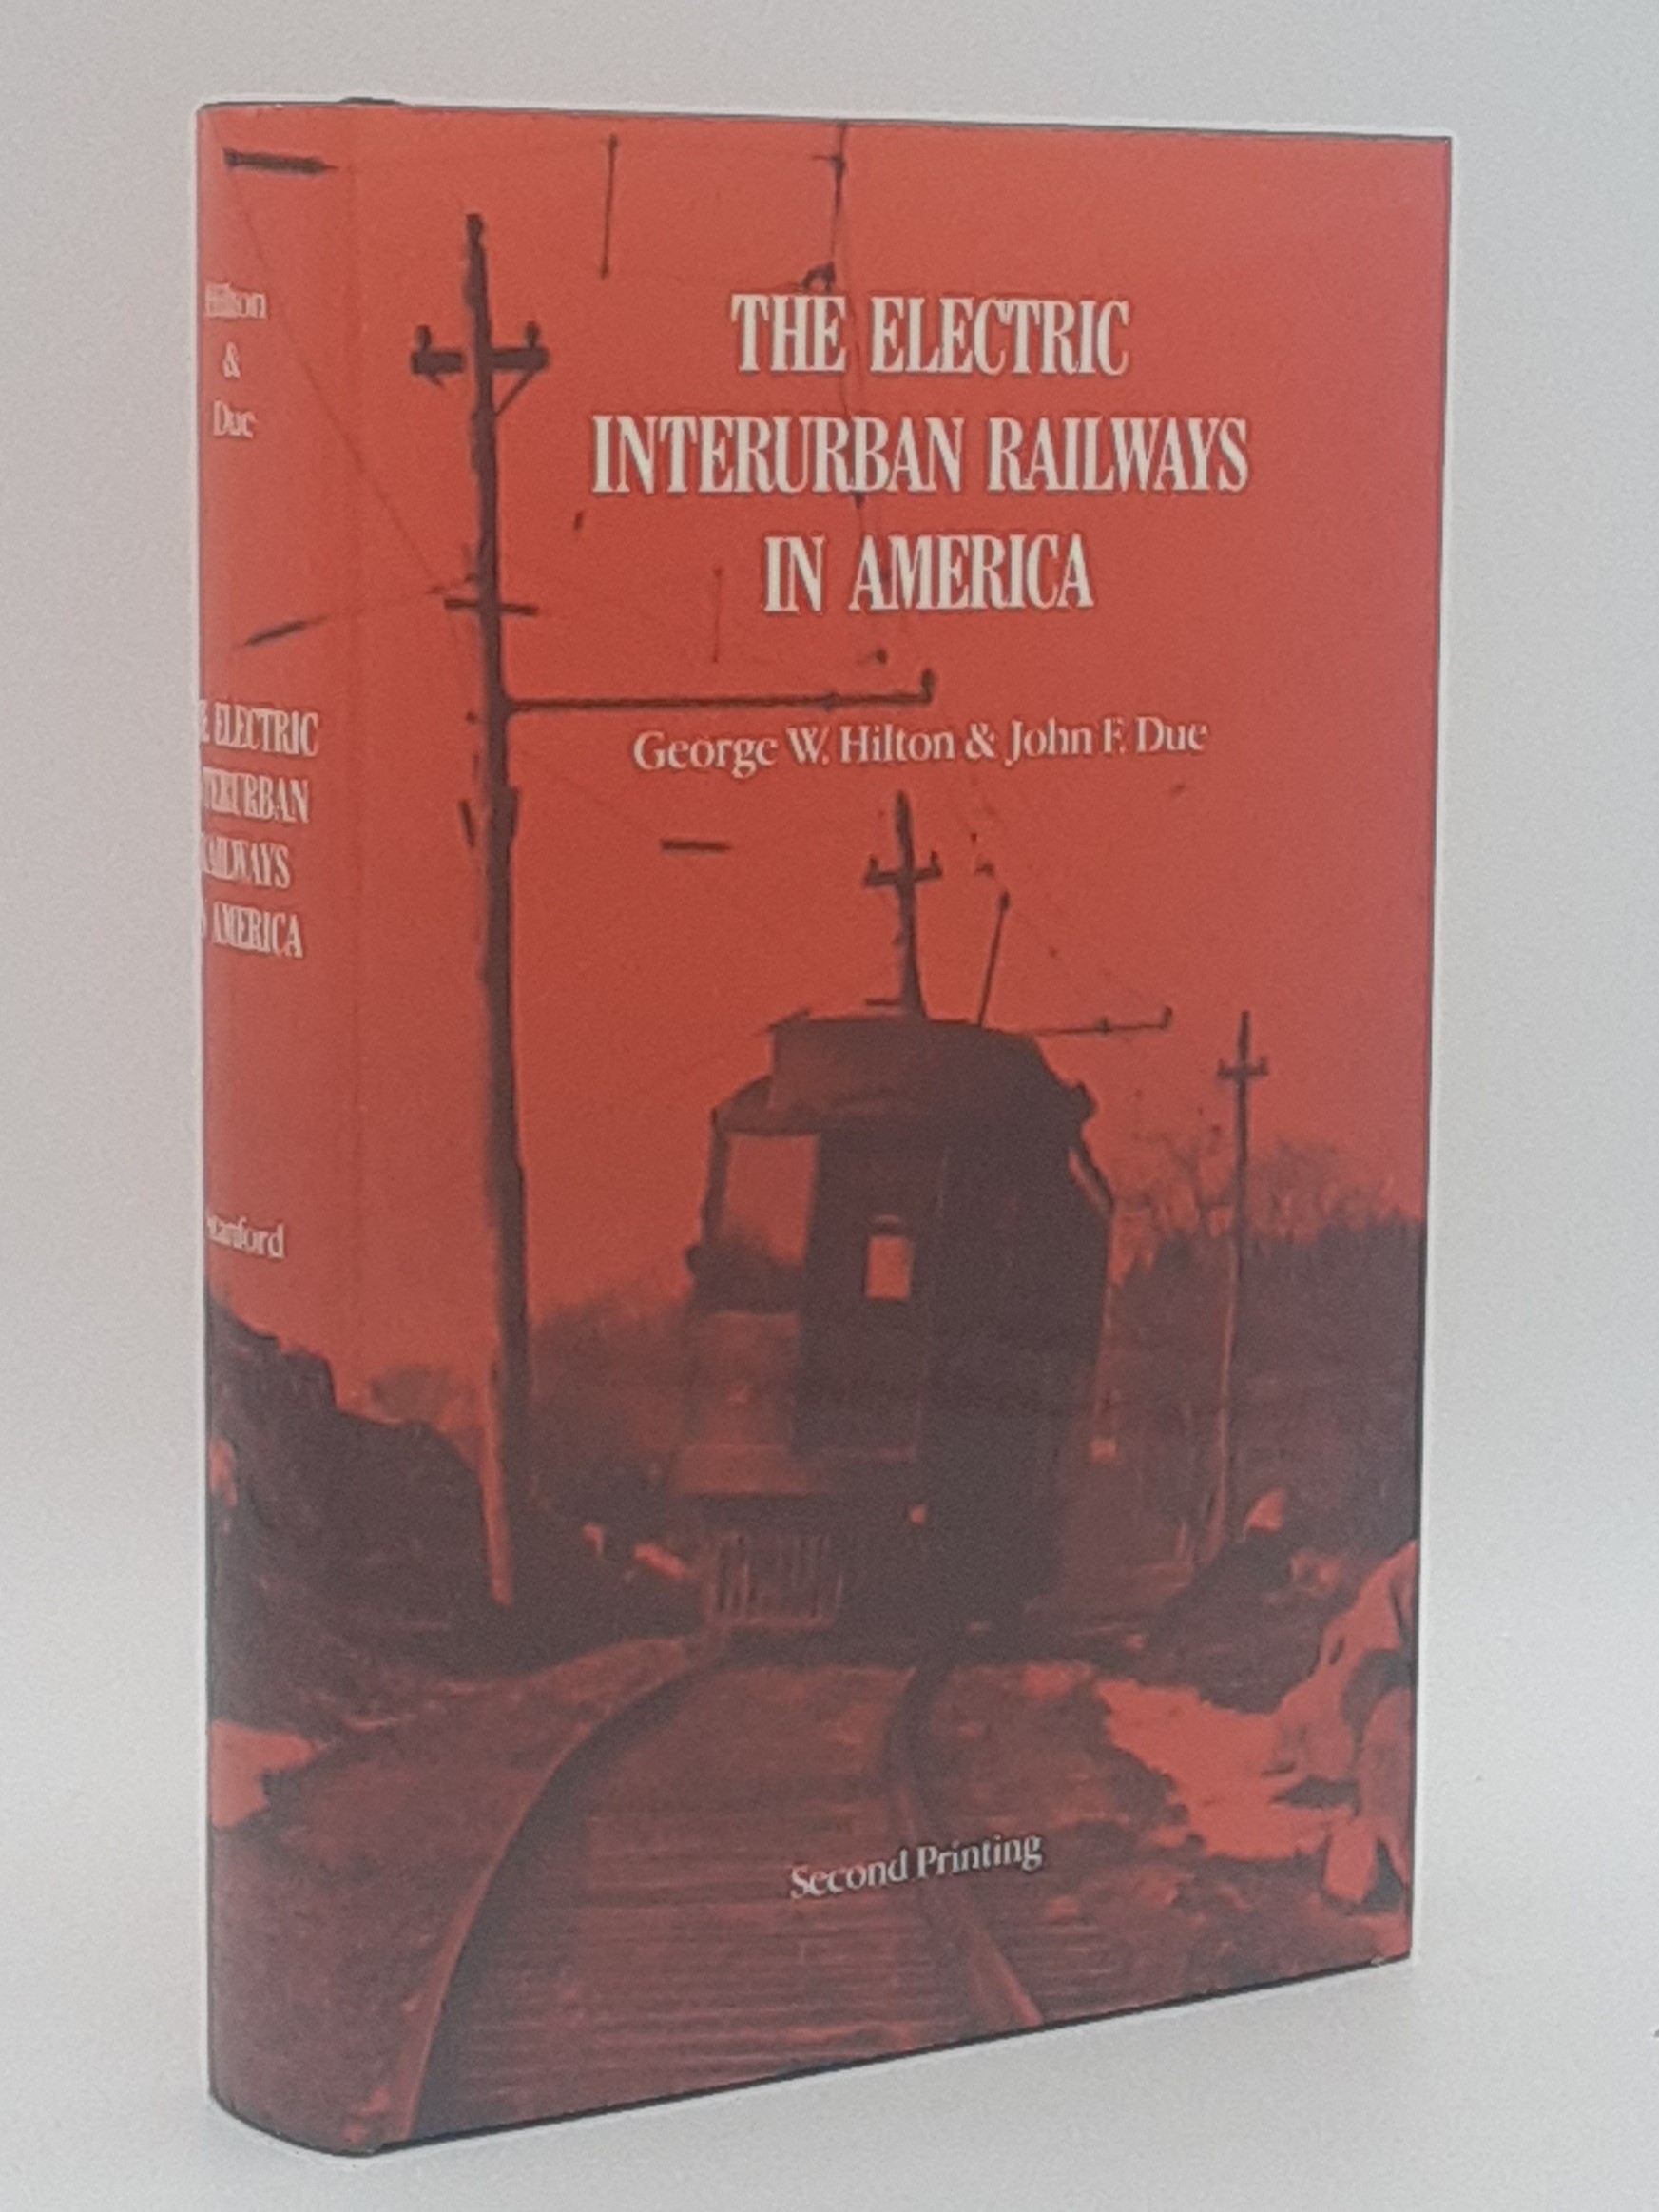 The Electric Interurban Railways in America. - Hilton, George W. and John F. Due.